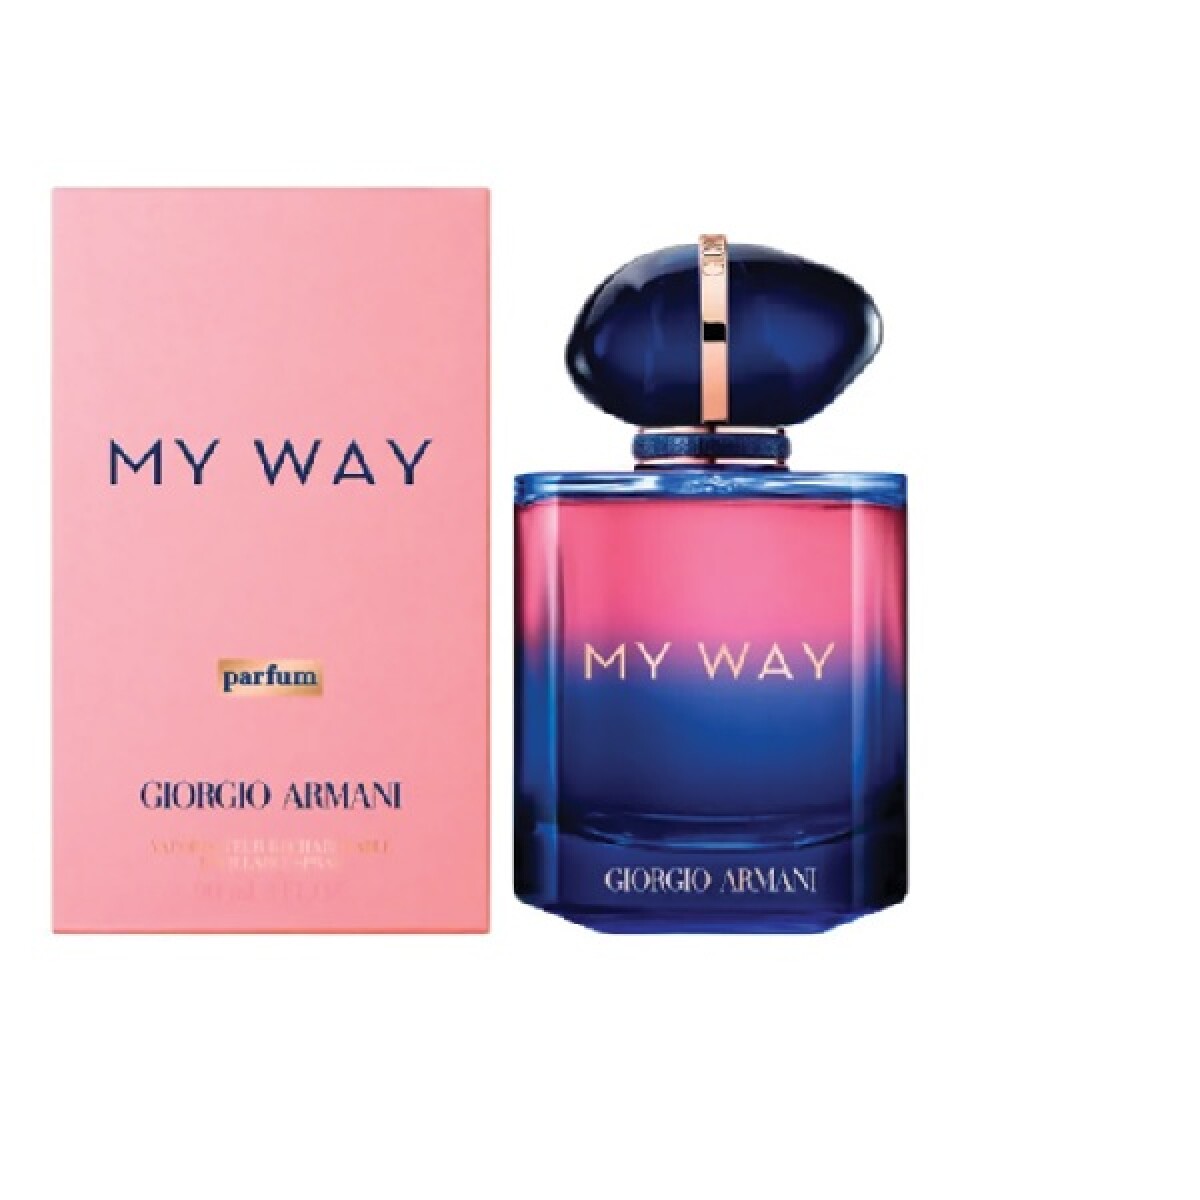 Giorgio Armani Perfume My Way Le Parfum 30 ml 